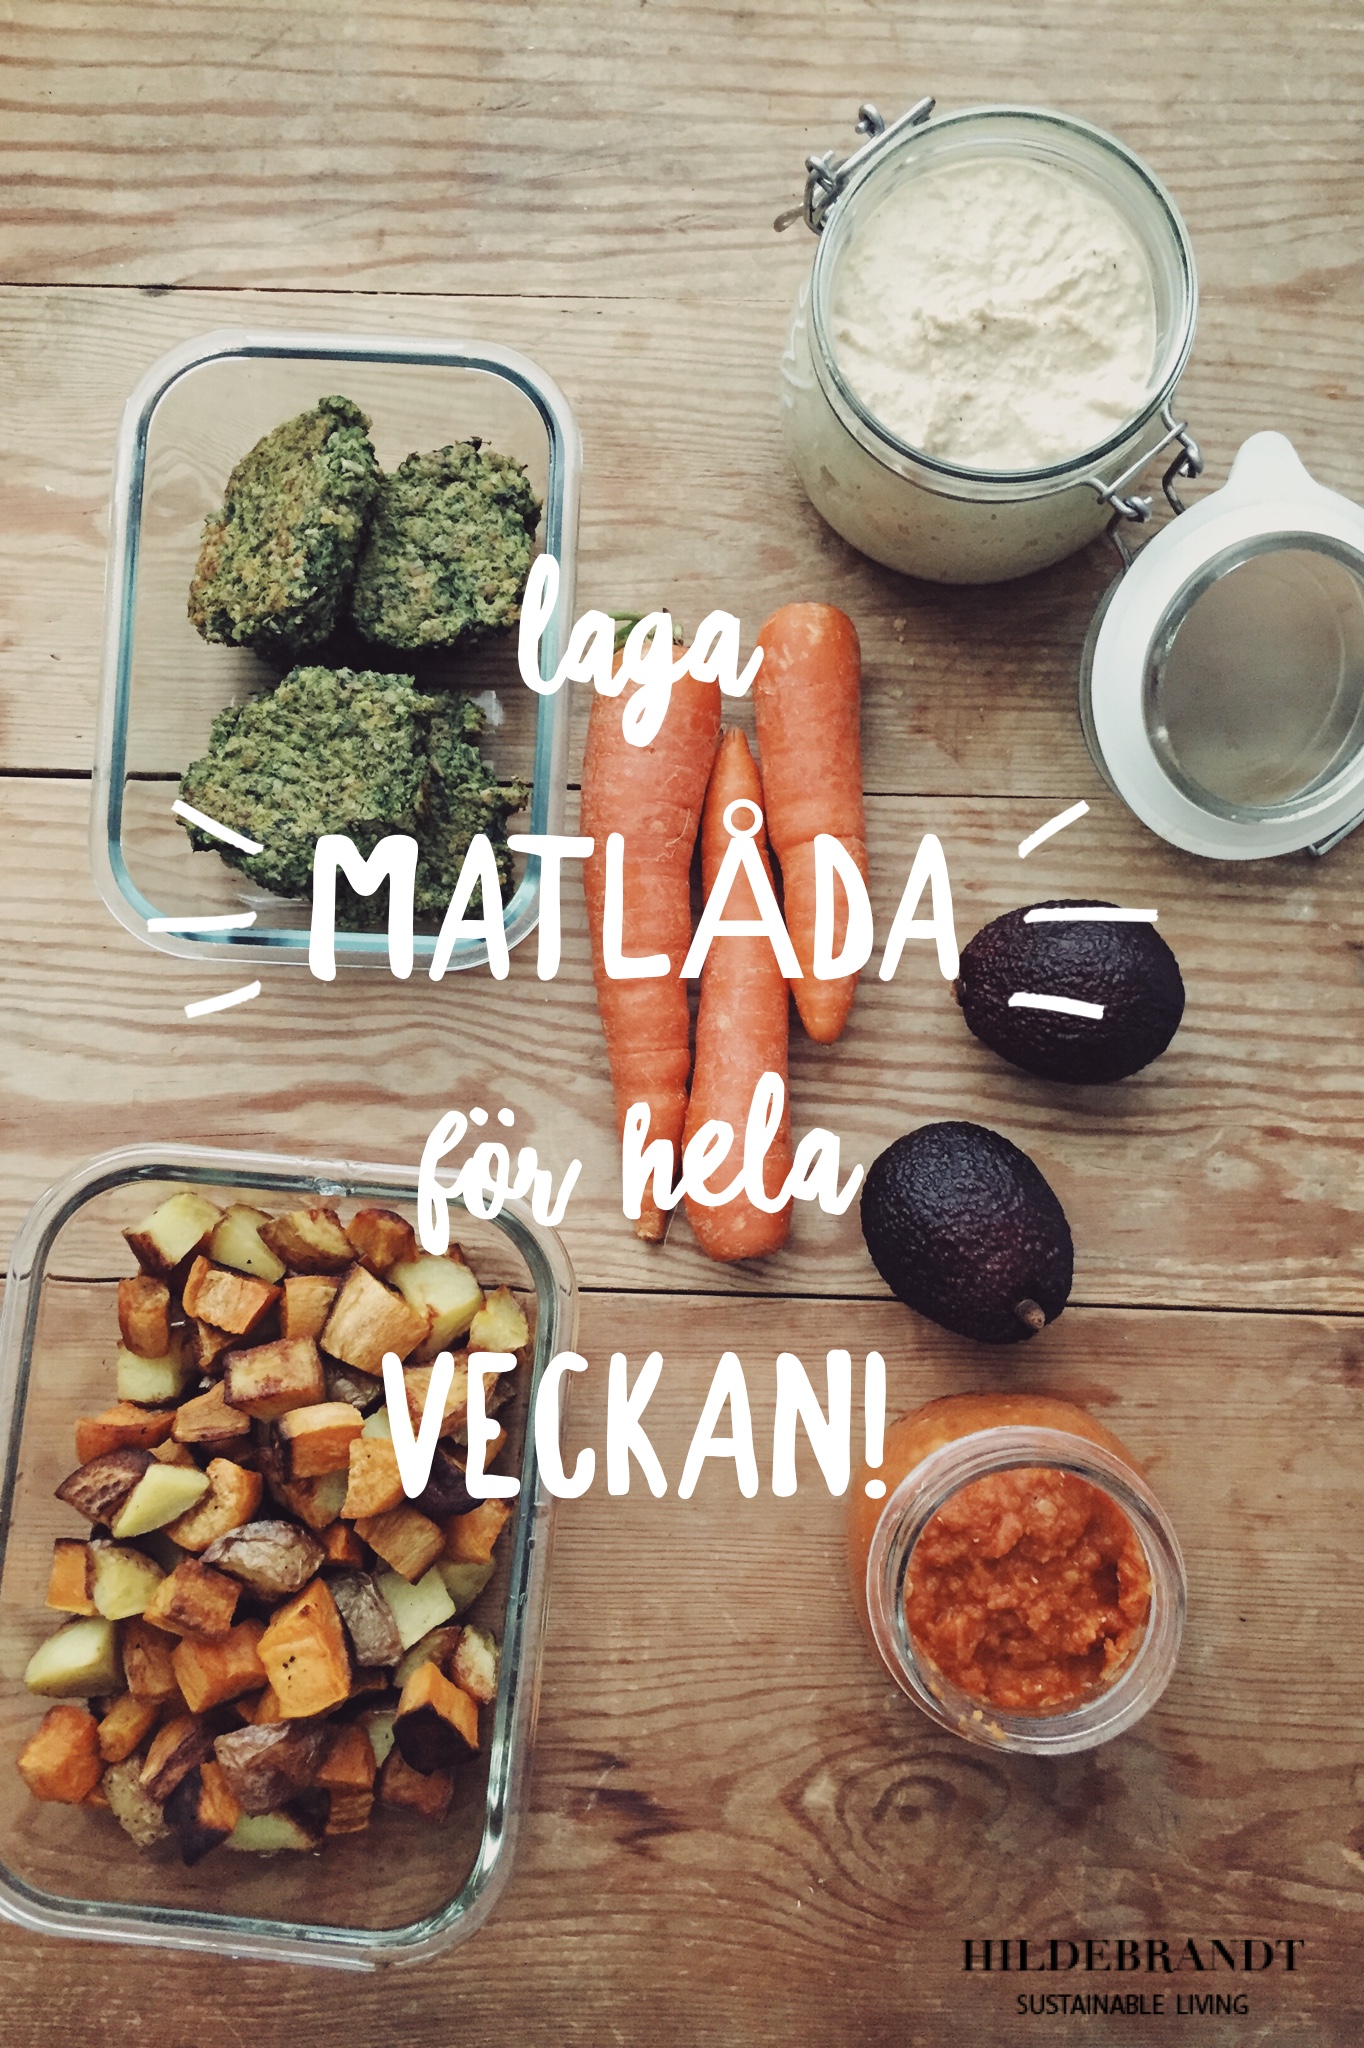 matlada-hummus-vegan-healthy-lifestyle